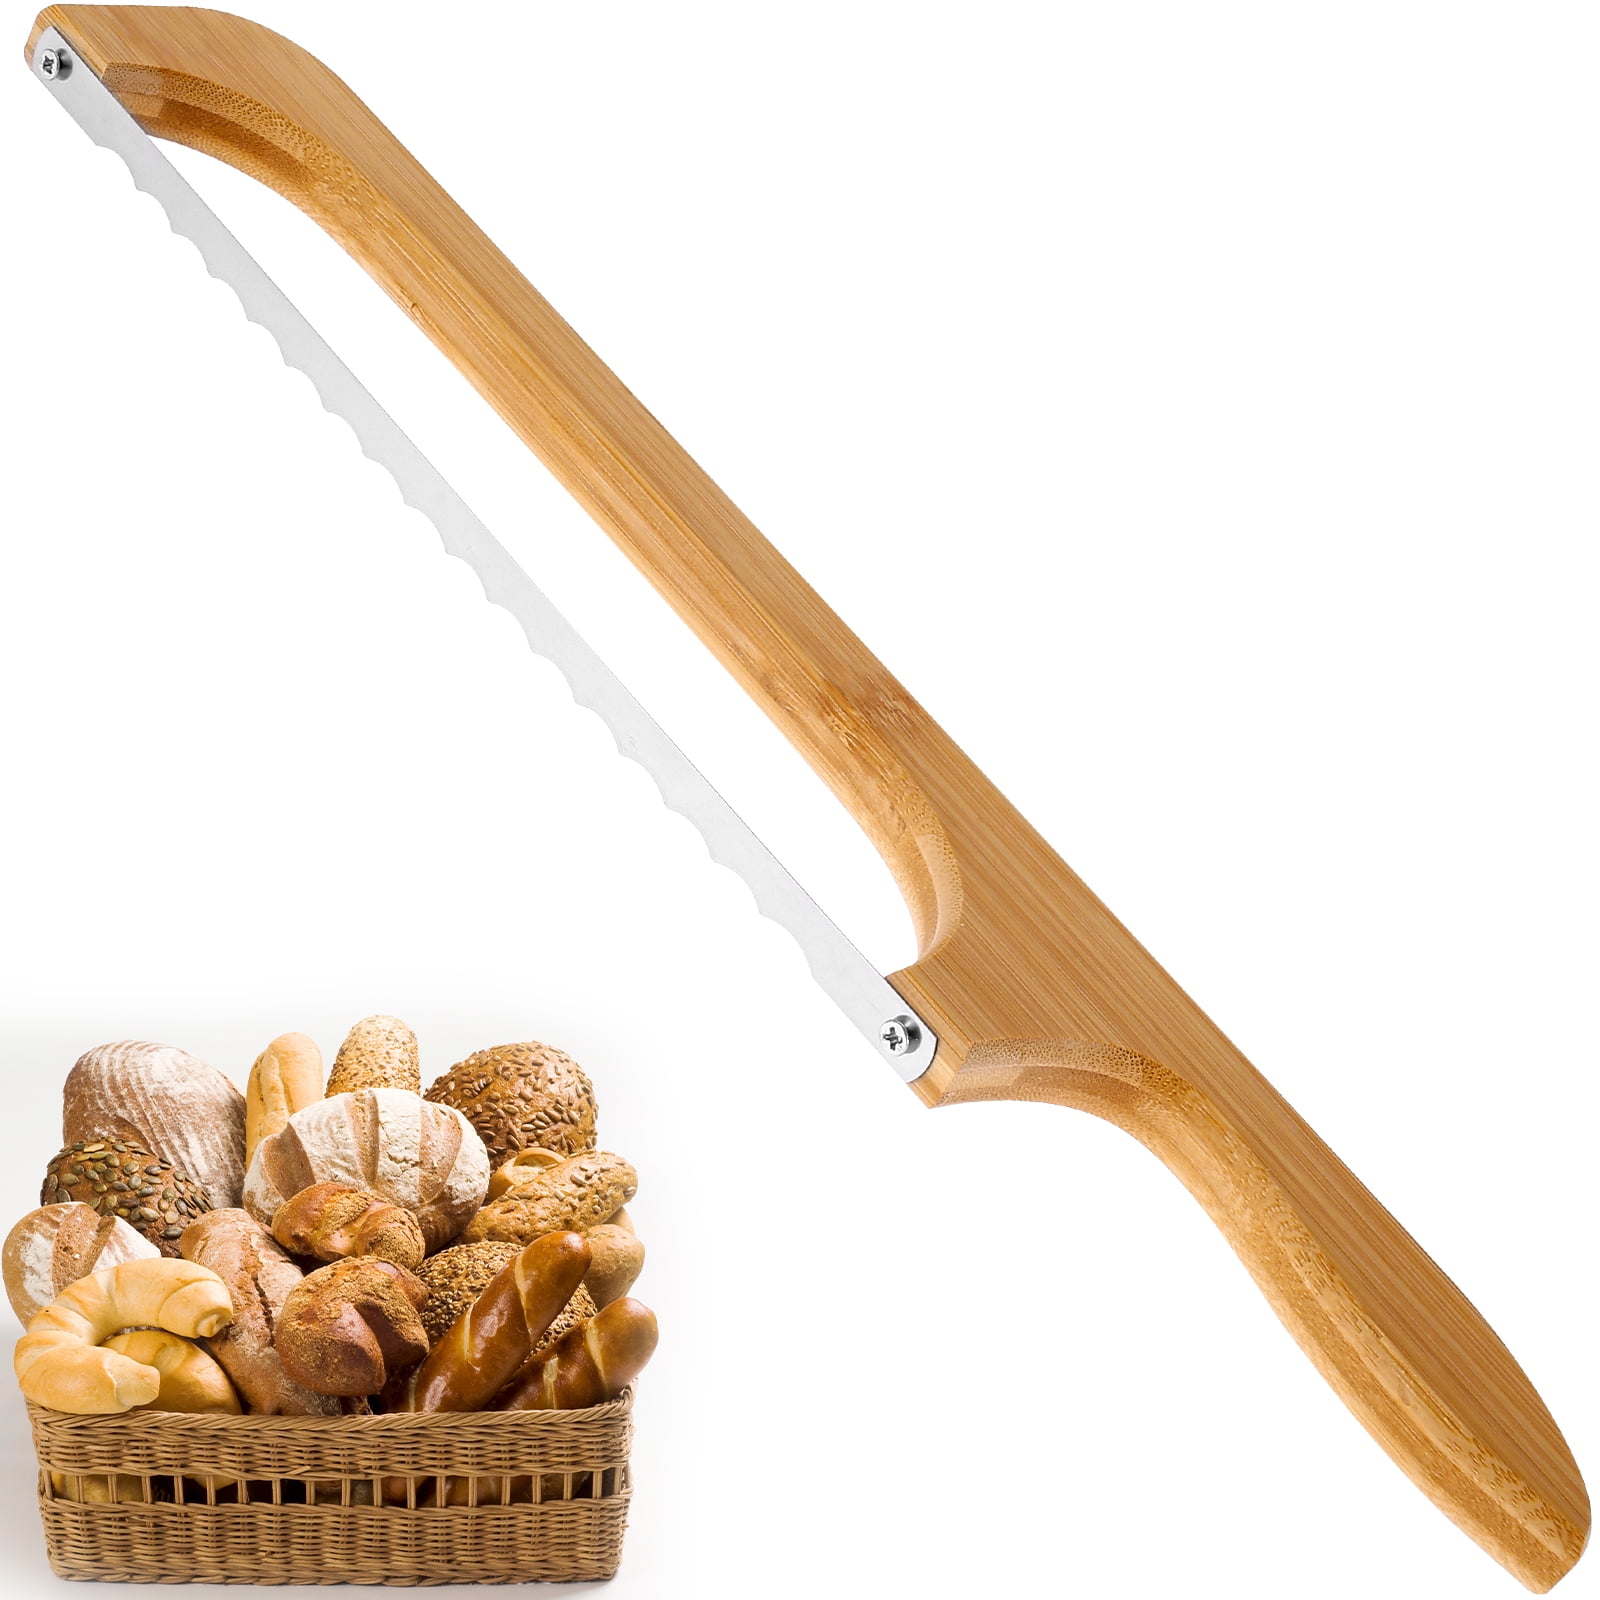 CHILLKET Bread Knife, Bread Slicer for Homemade Bread, 8 inch Serrated Knife for Crusty Bread, Sandwich, Cake, Bagels